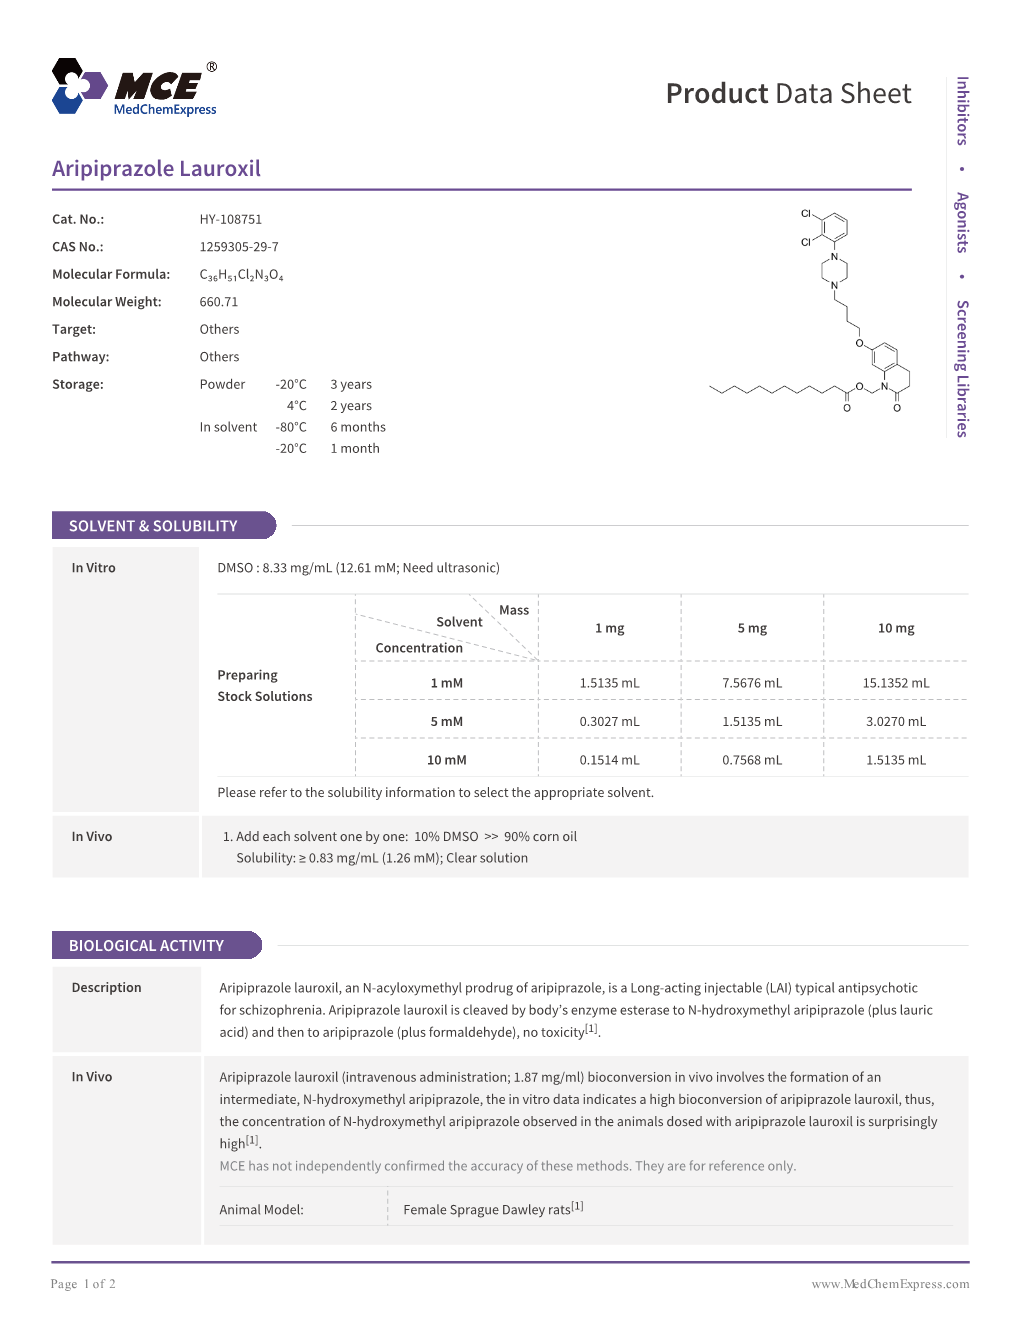 Aripiprazole Lauroxil | Medchemexpress